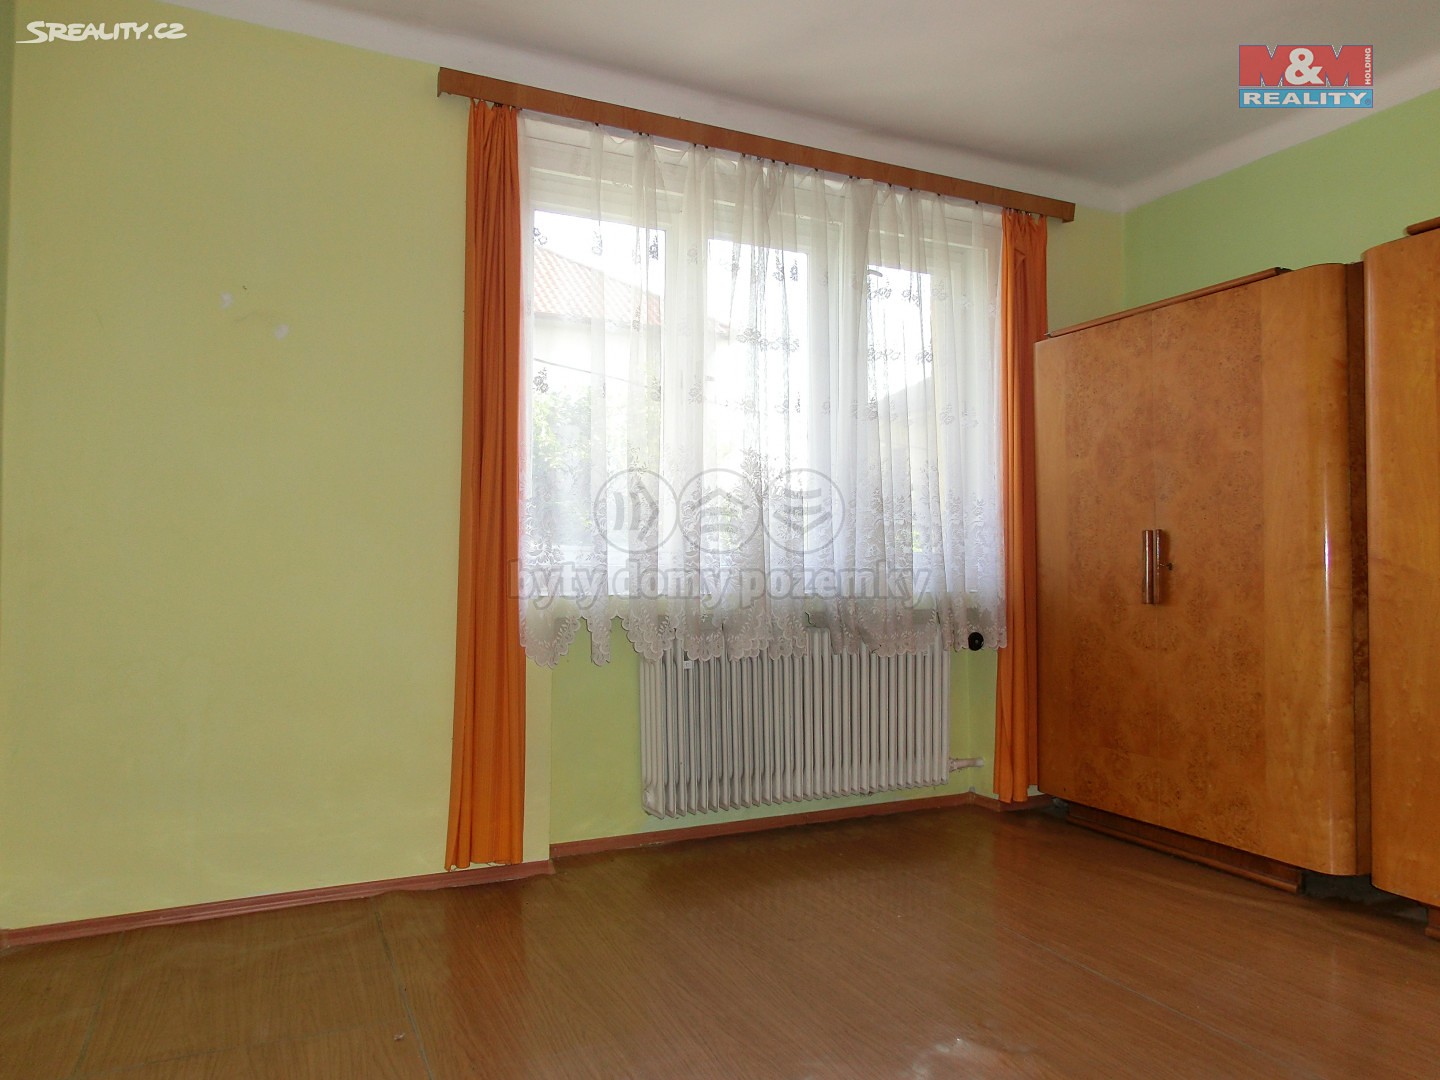 Prodej  rodinného domu 150 m², pozemek 827 m², Trhový Štěpánov, okres Benešov